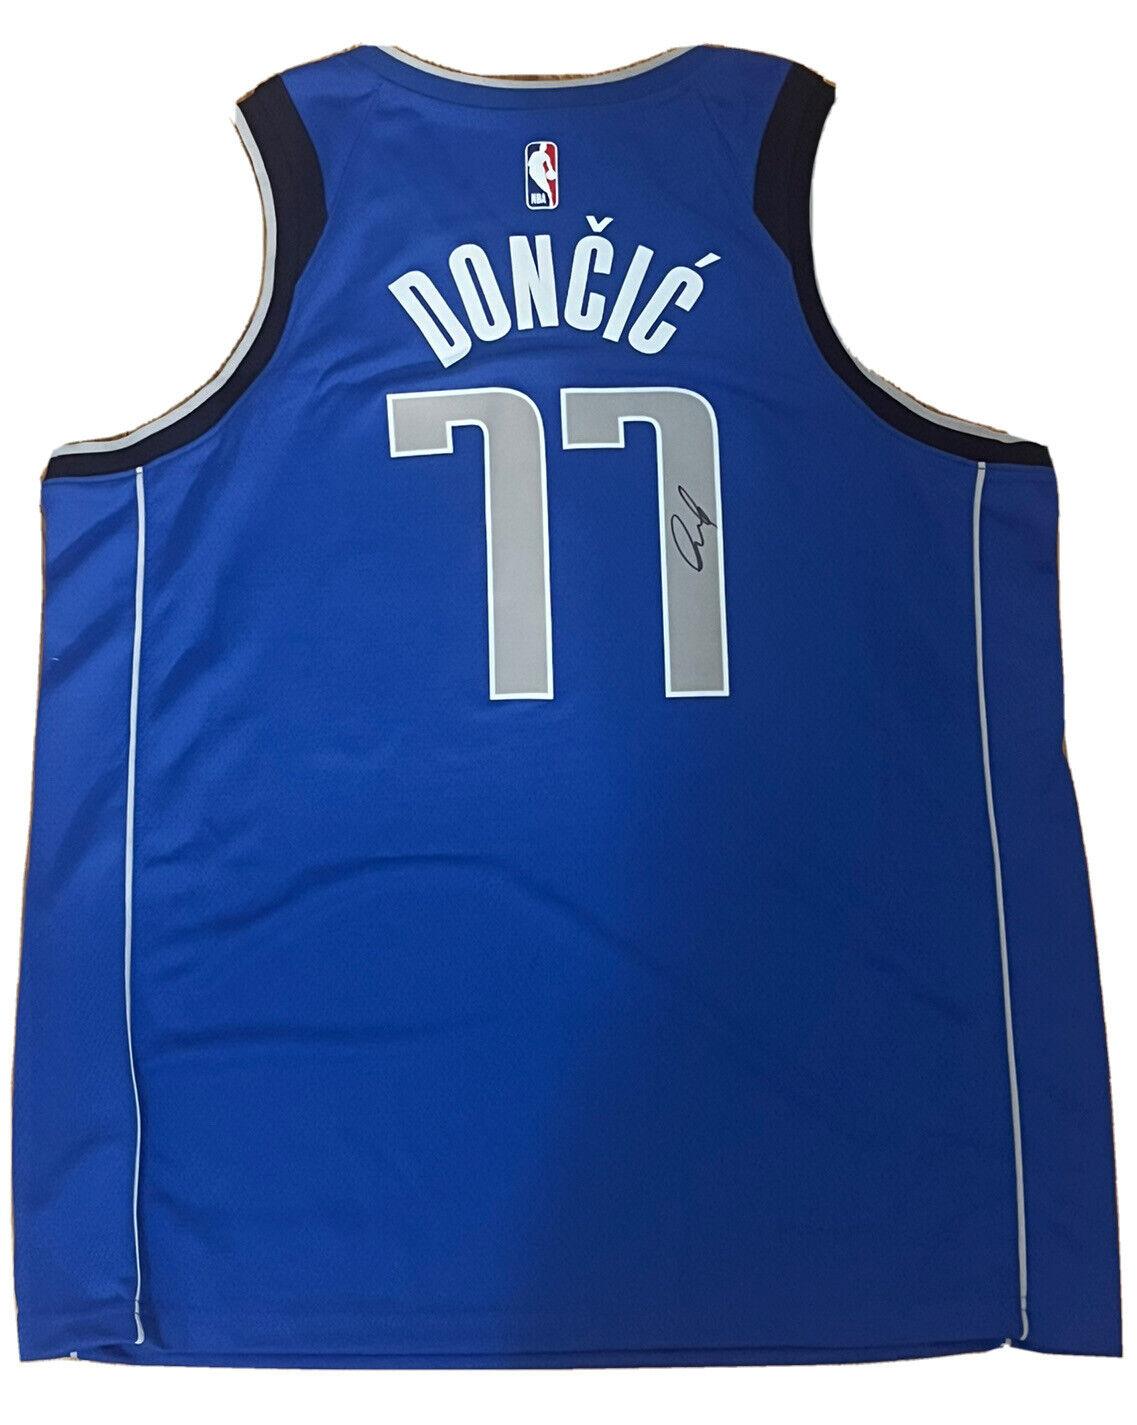 Luka Doncic Signed Dallas Mavericks Nike Swingman Navy Blue NBA